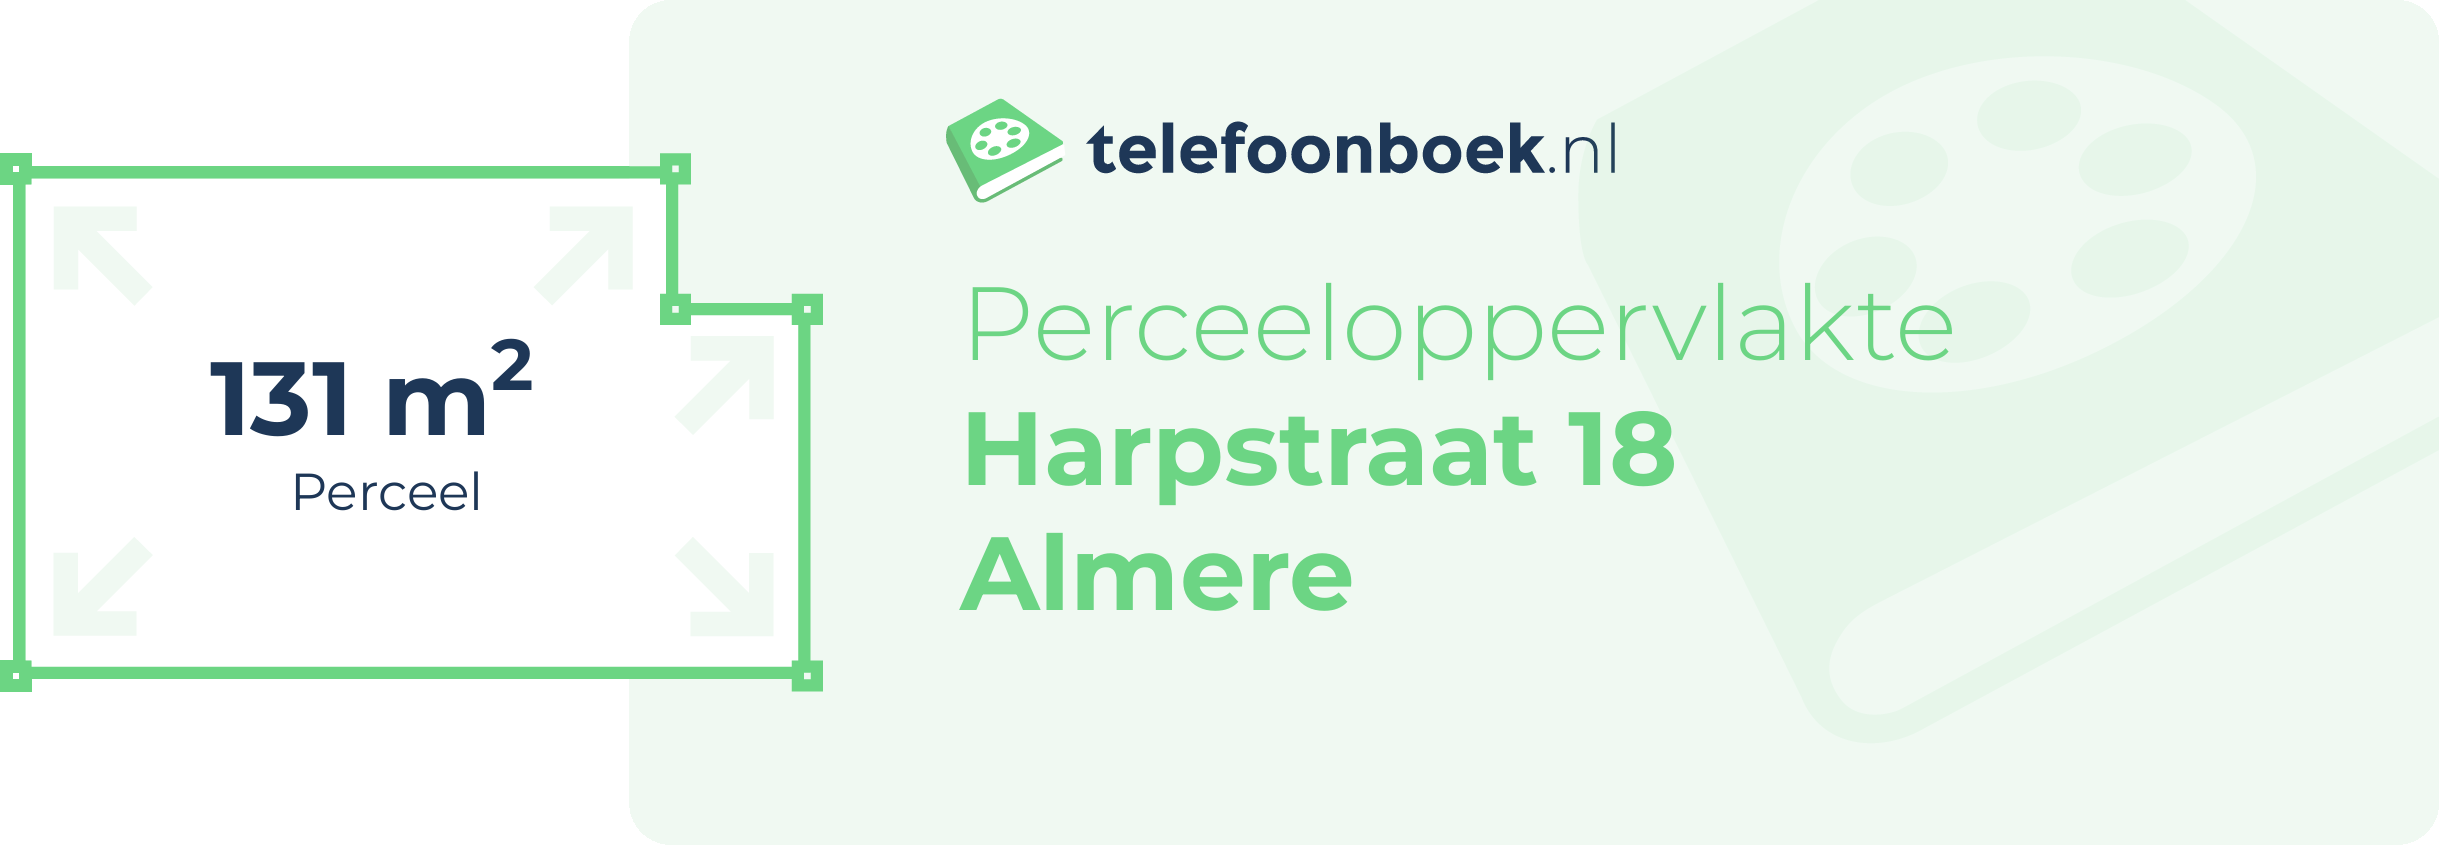 Perceeloppervlakte Harpstraat 18 Almere